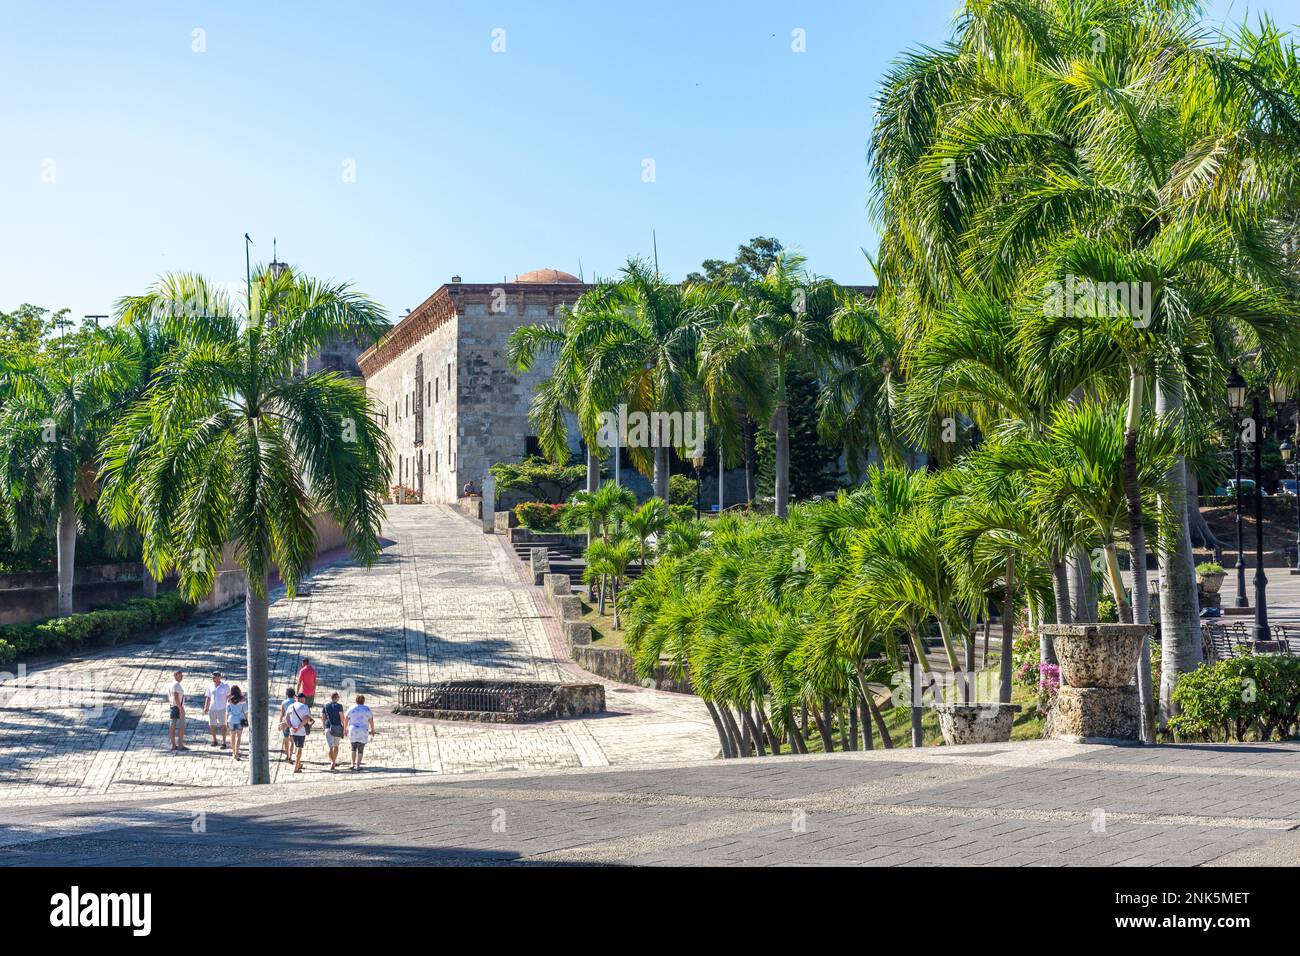 Plaza de la Espana de la Hispanidad, Santo Domingo, République dominicaine (Republica Dominicana), grandes Antilles, Caraïbes Banque D'Images